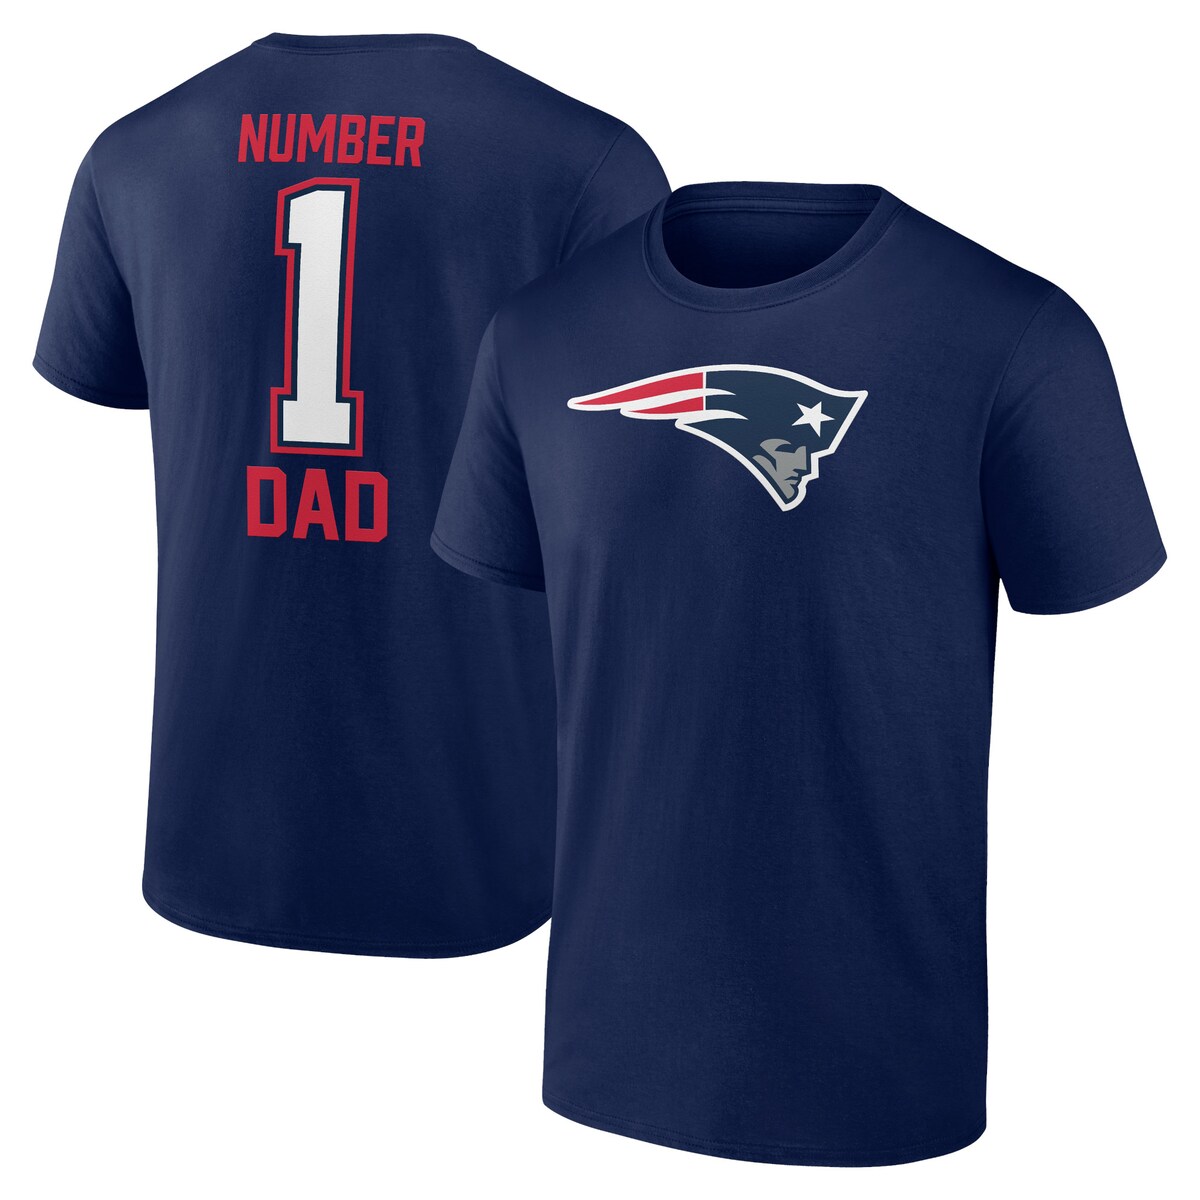 Men's Fanatics Branded Navy New England Patriots Father's Day T-Shirt